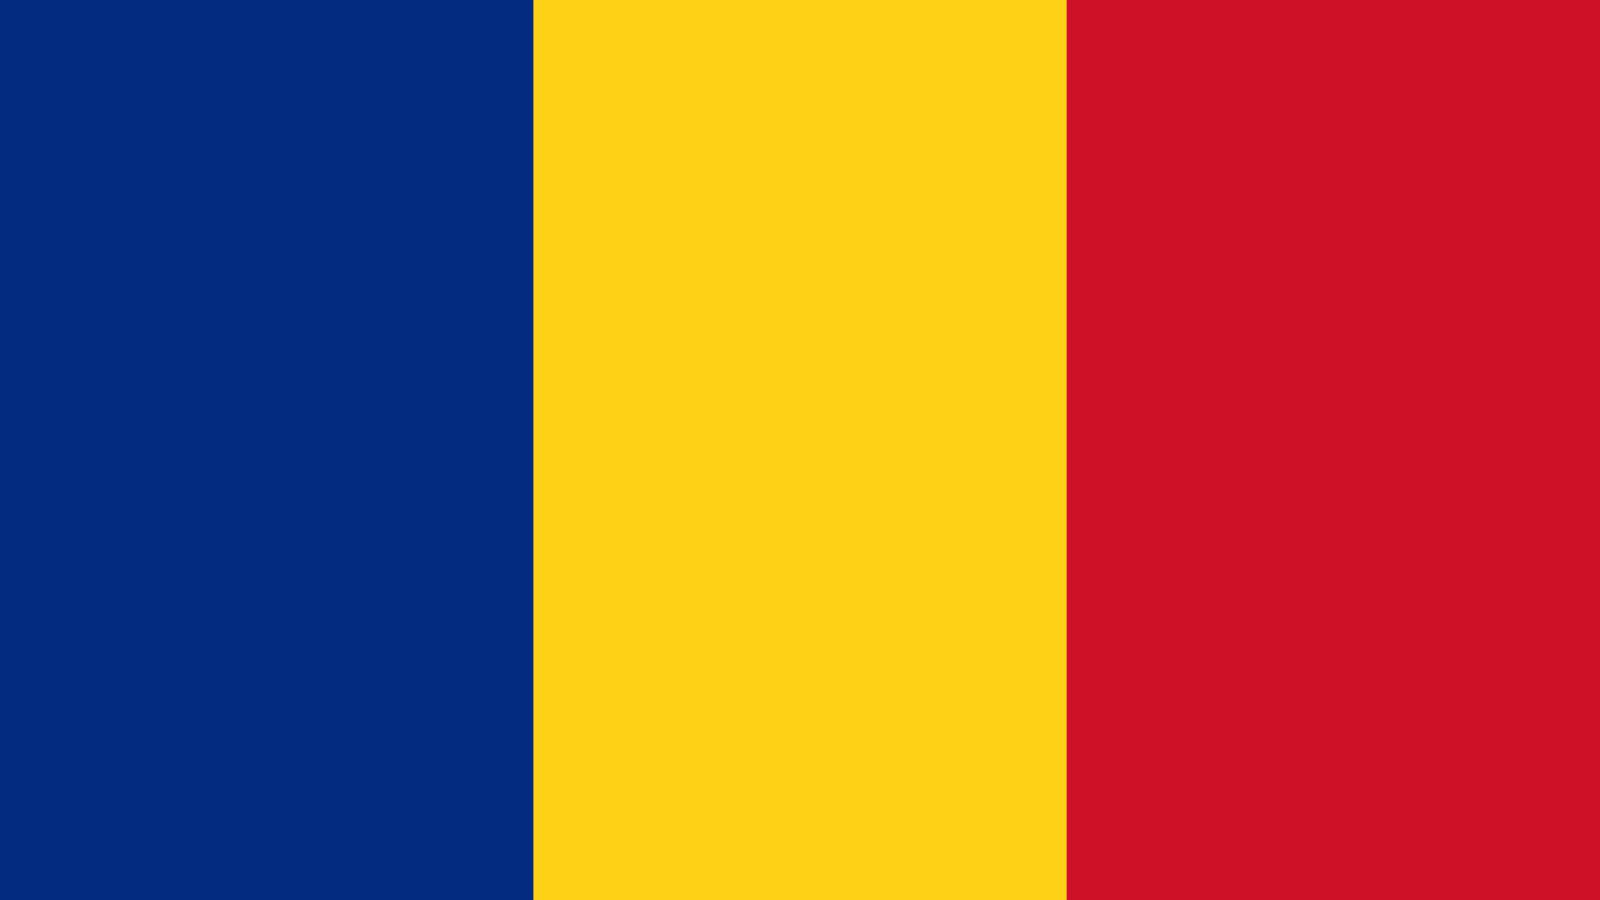 Ogłasza rząd rumuński